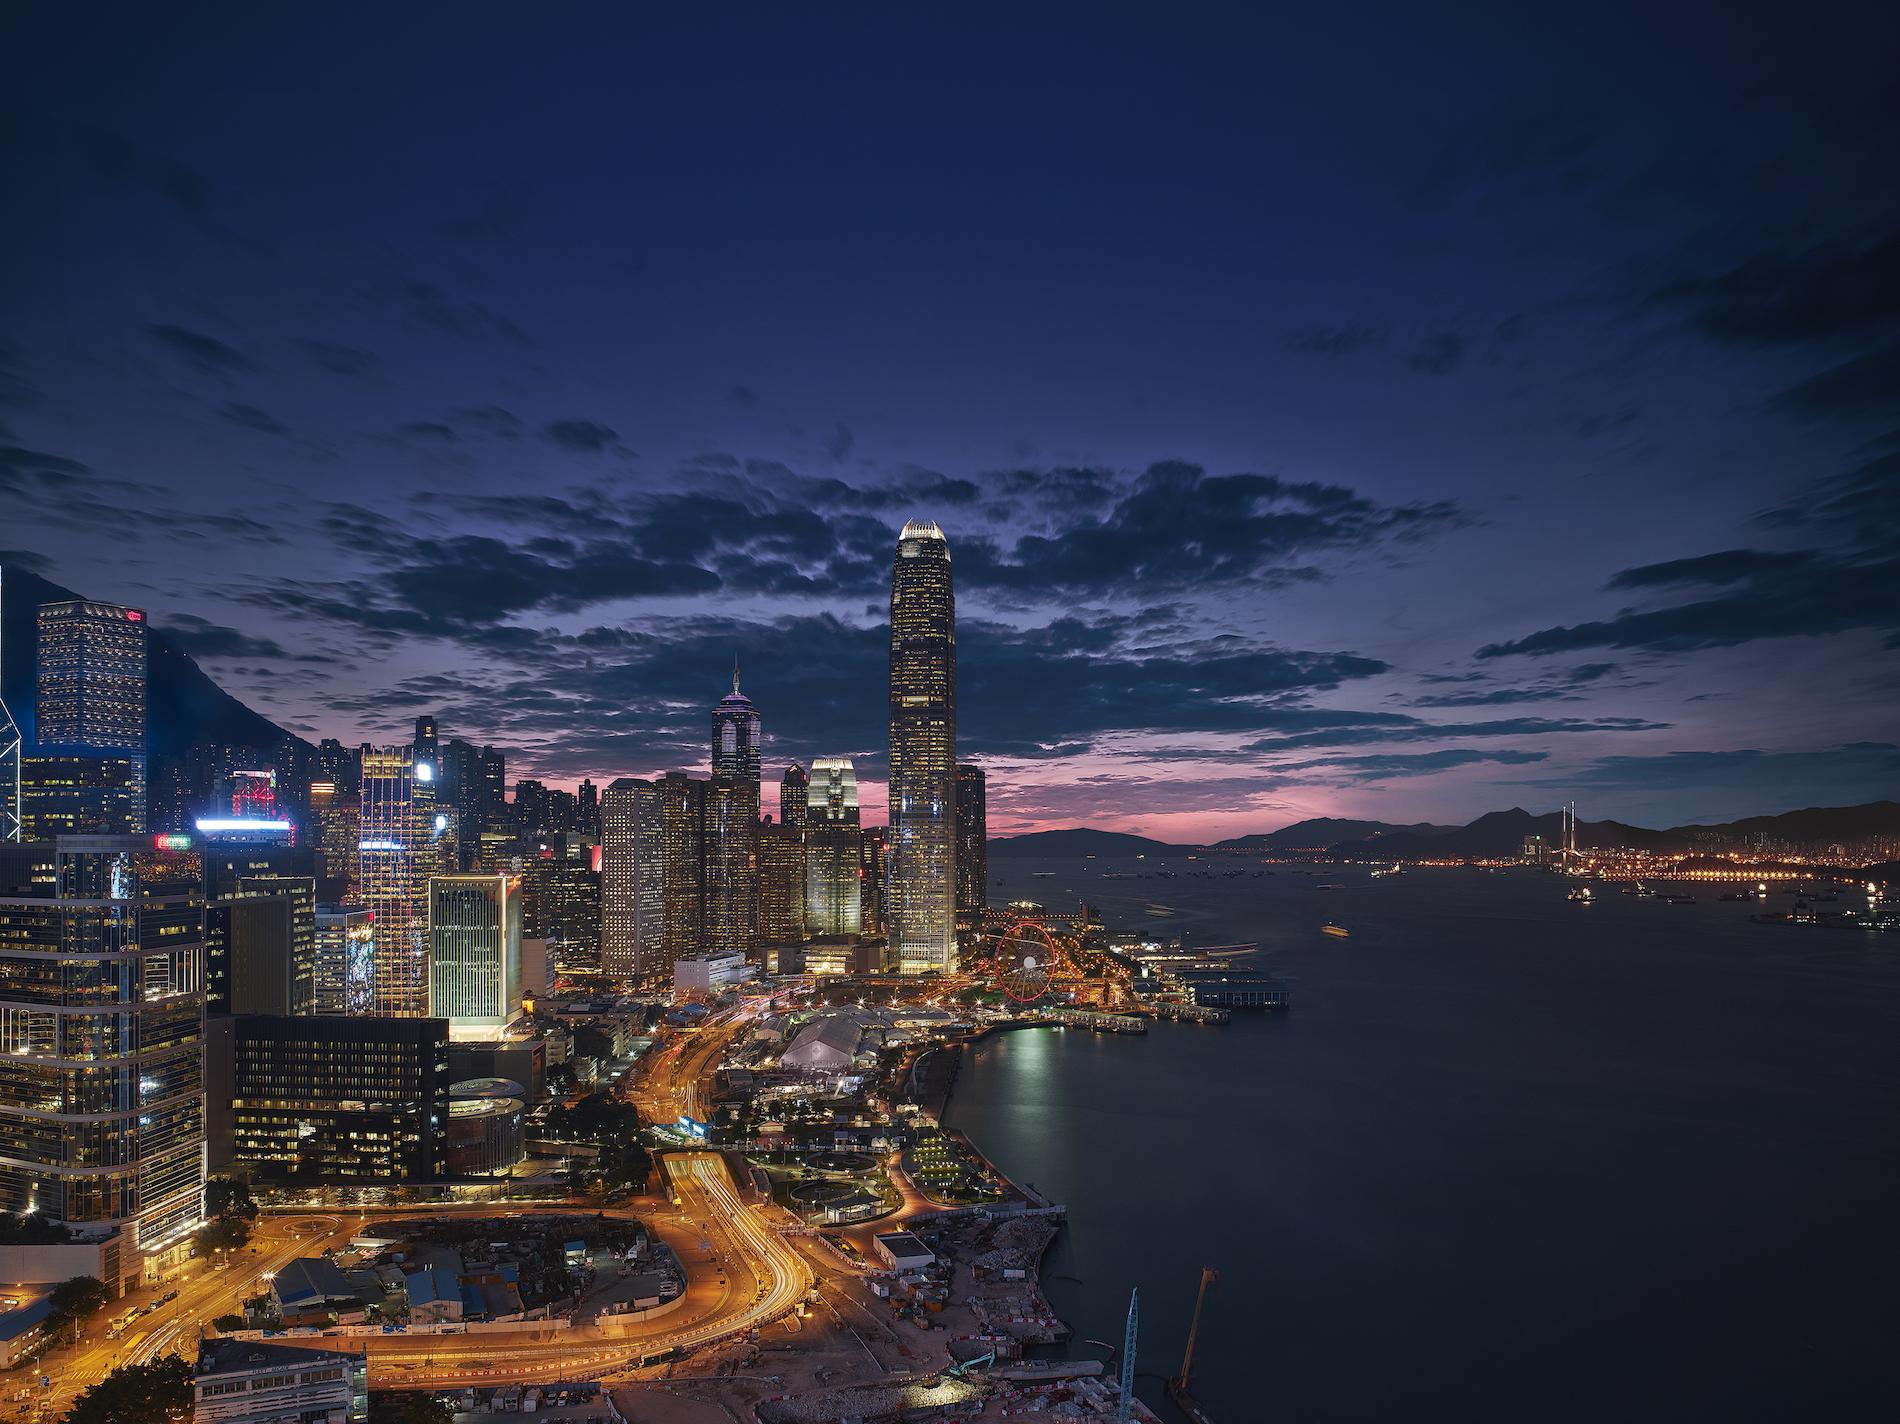 A Dreamlike 24-Hour Staycation at Grand Hyatt Hong Kong